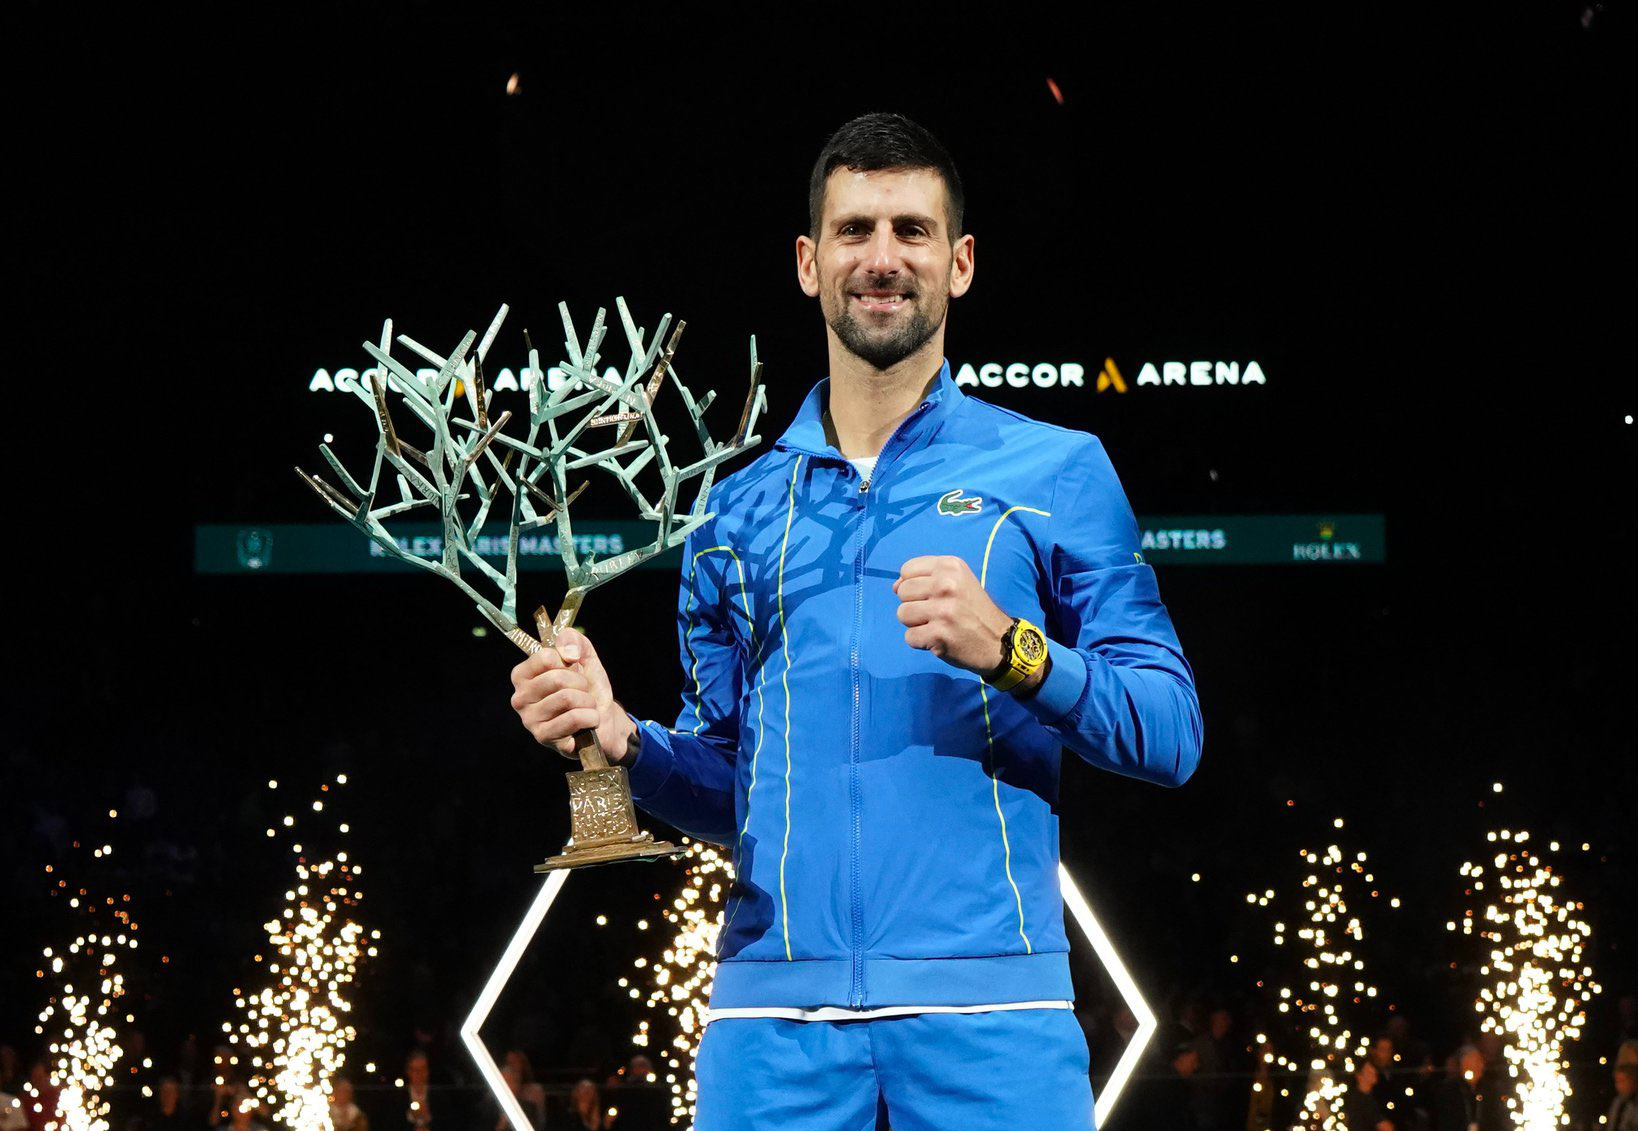 Novak Djokovic beats Grigor Dimitrov to win 40th Masters title